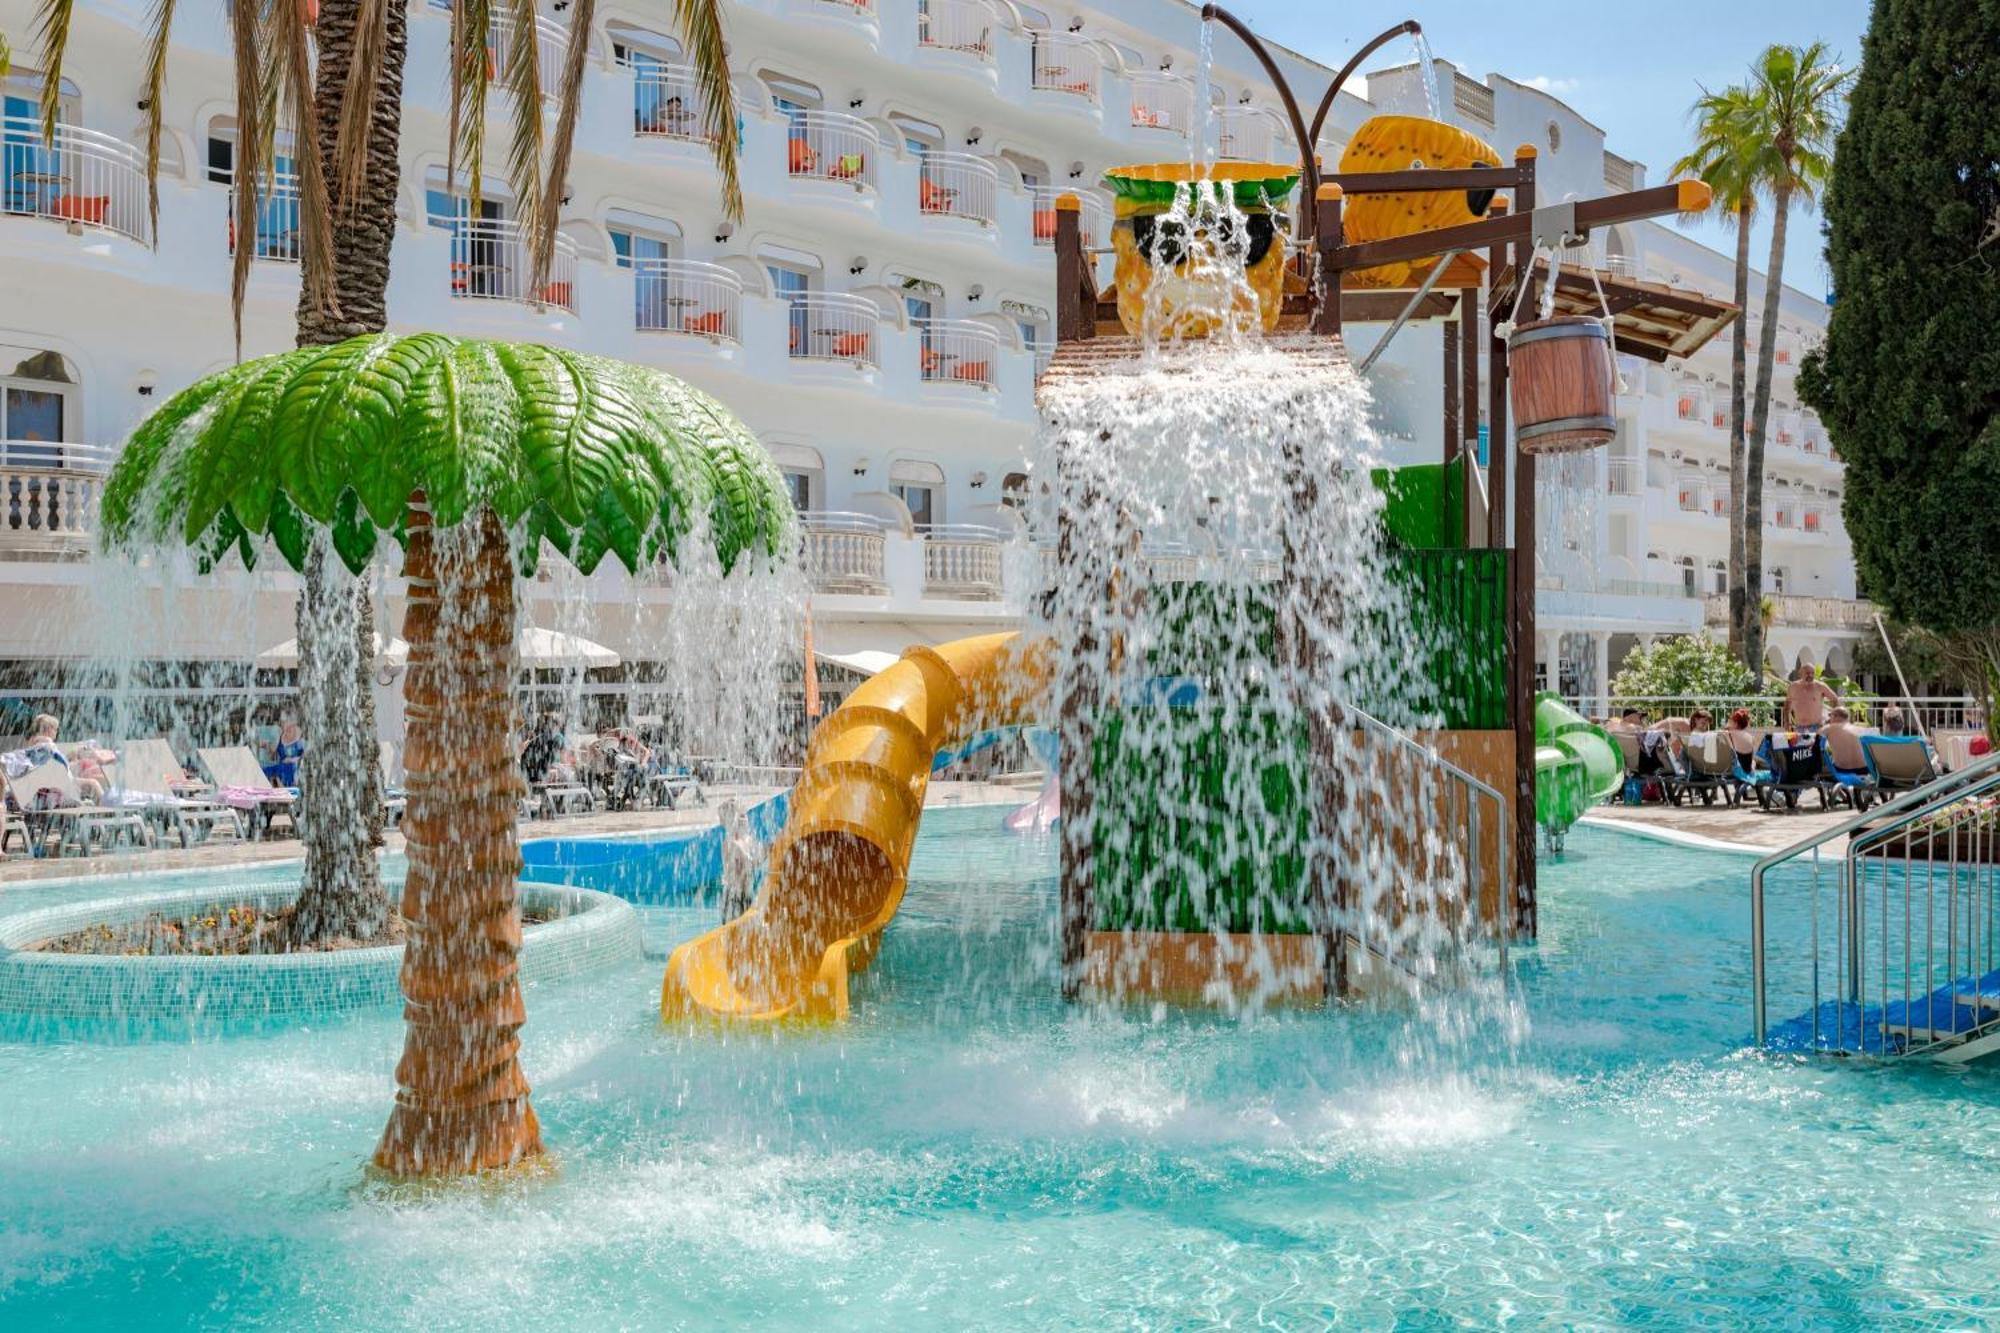 Hotel Best Lloret Splash Lloret de Mar Kültér fotó